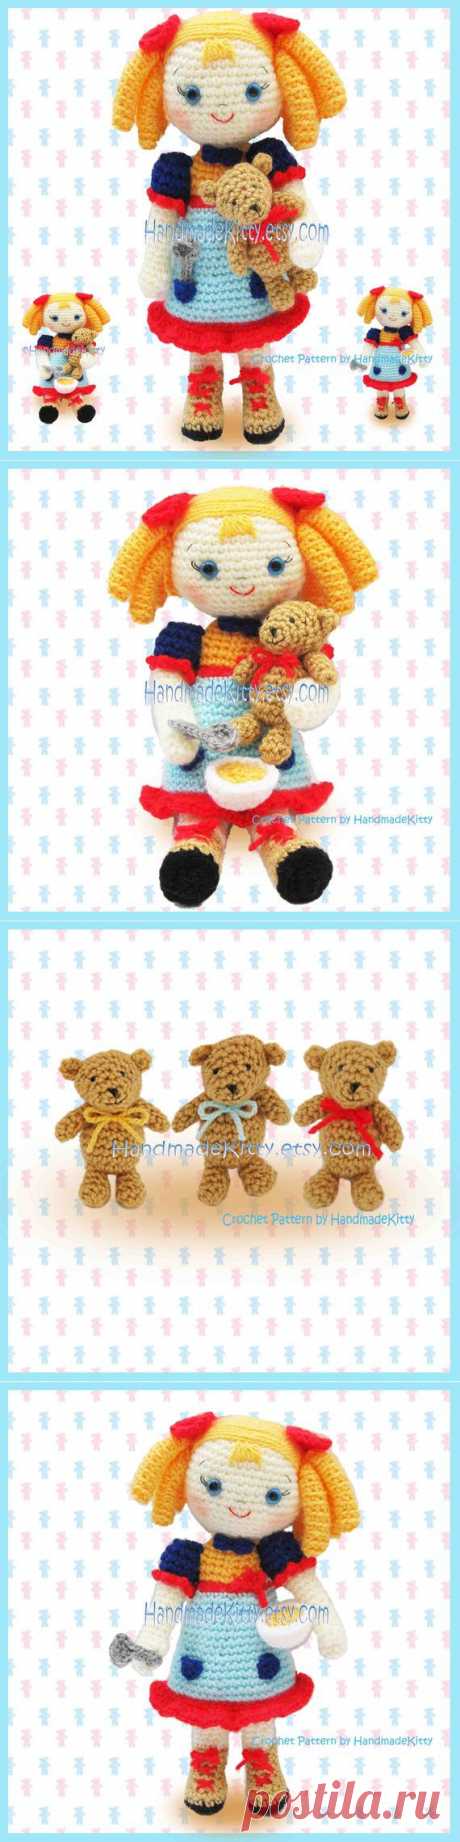 Златовласка и три маленьких медведей Амигуруми по handmadekitty